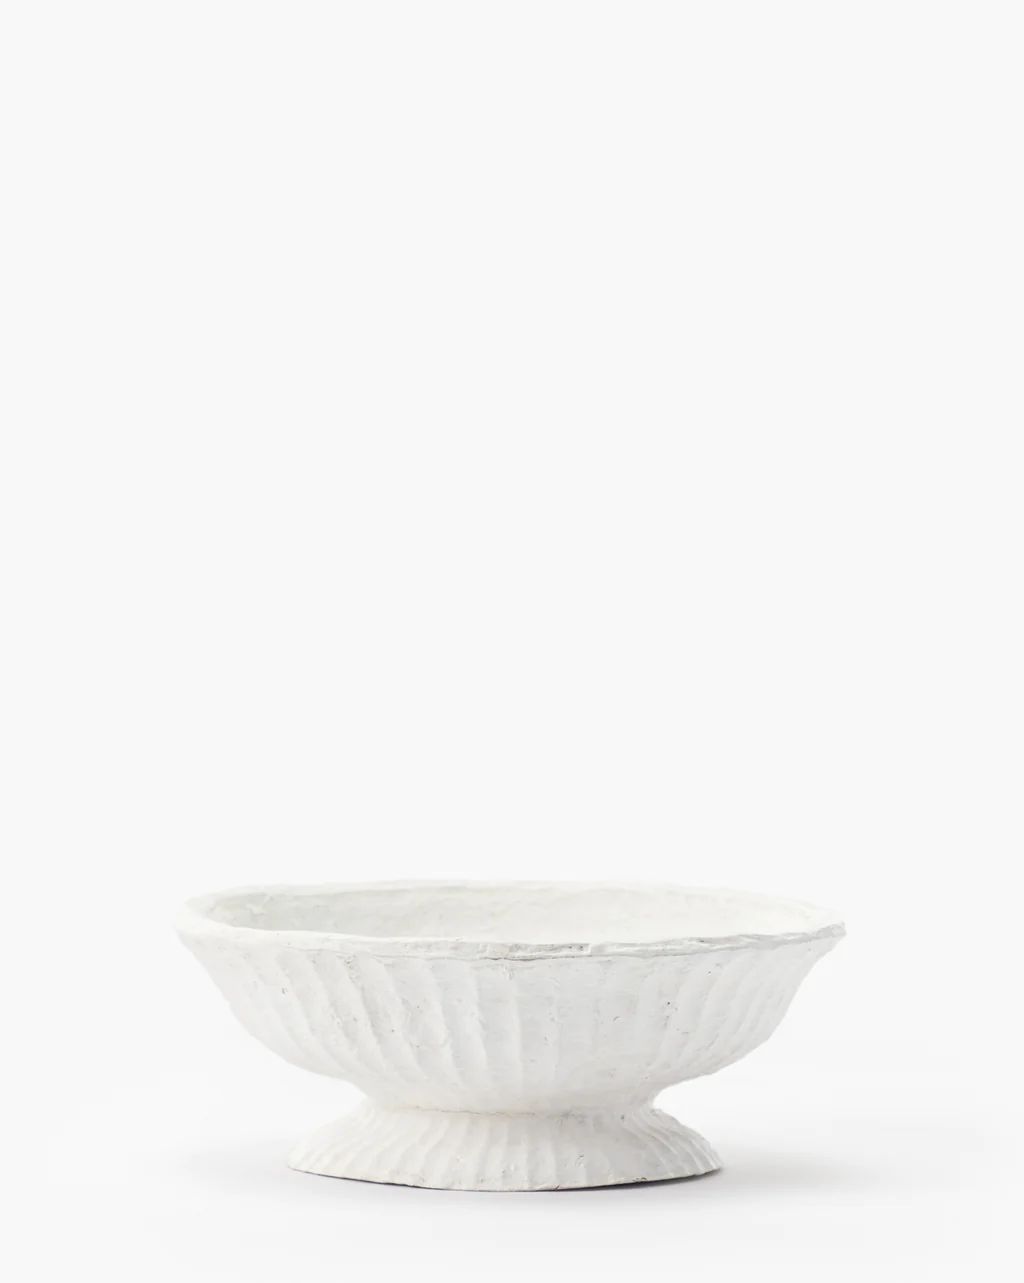 Arrieta Paper Mache Bowl | McGee & Co.